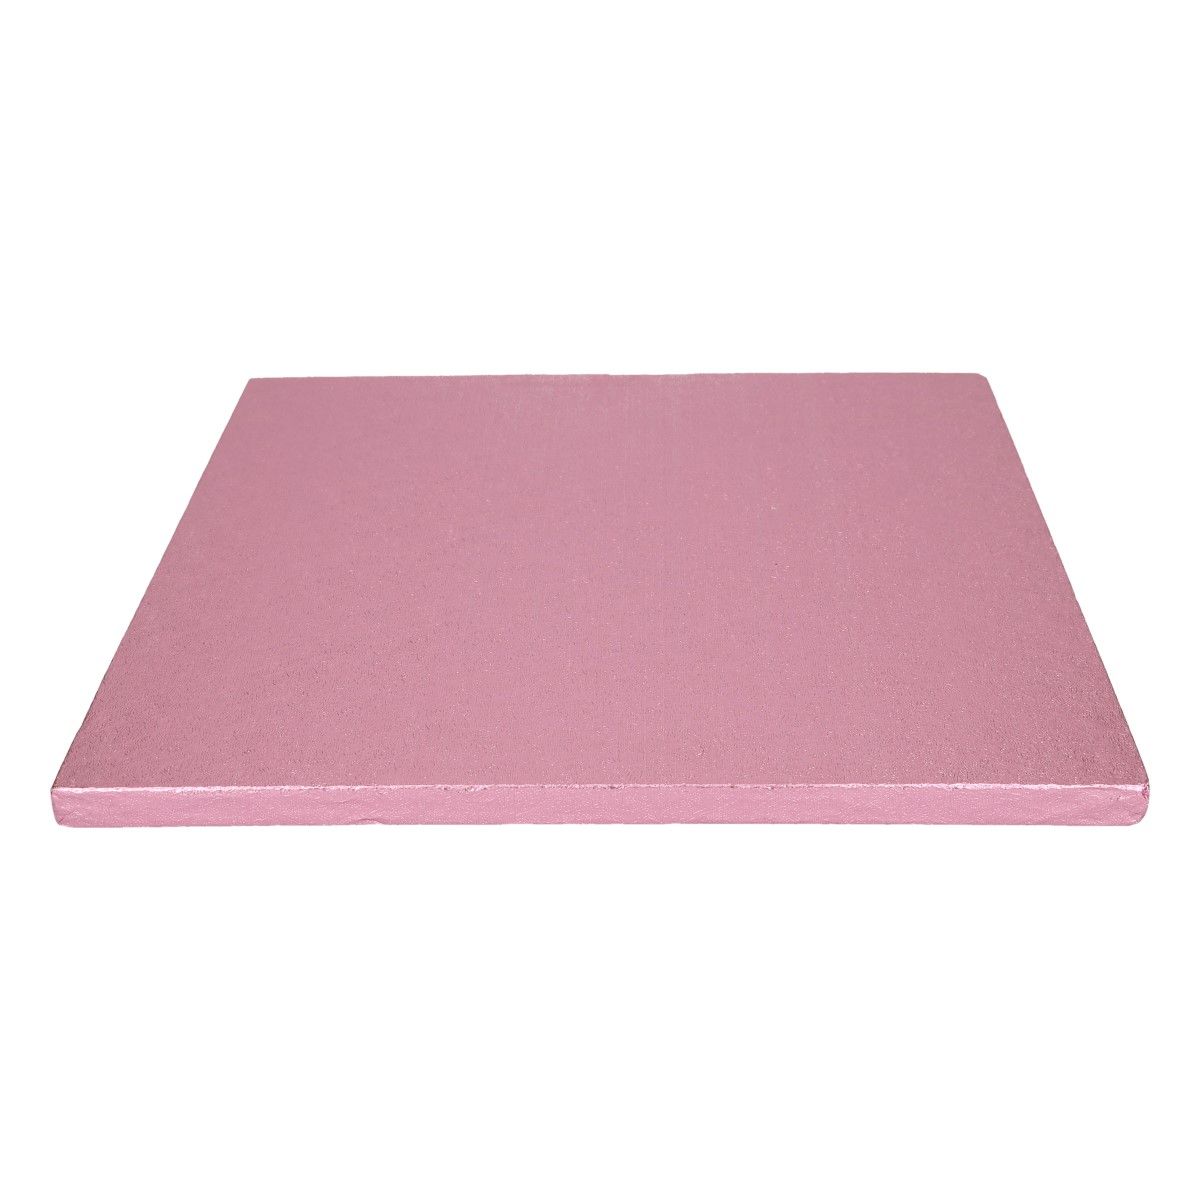 Kageplade lyserød kvadratisk 30,5 cm 1 cm tyk 1 stk